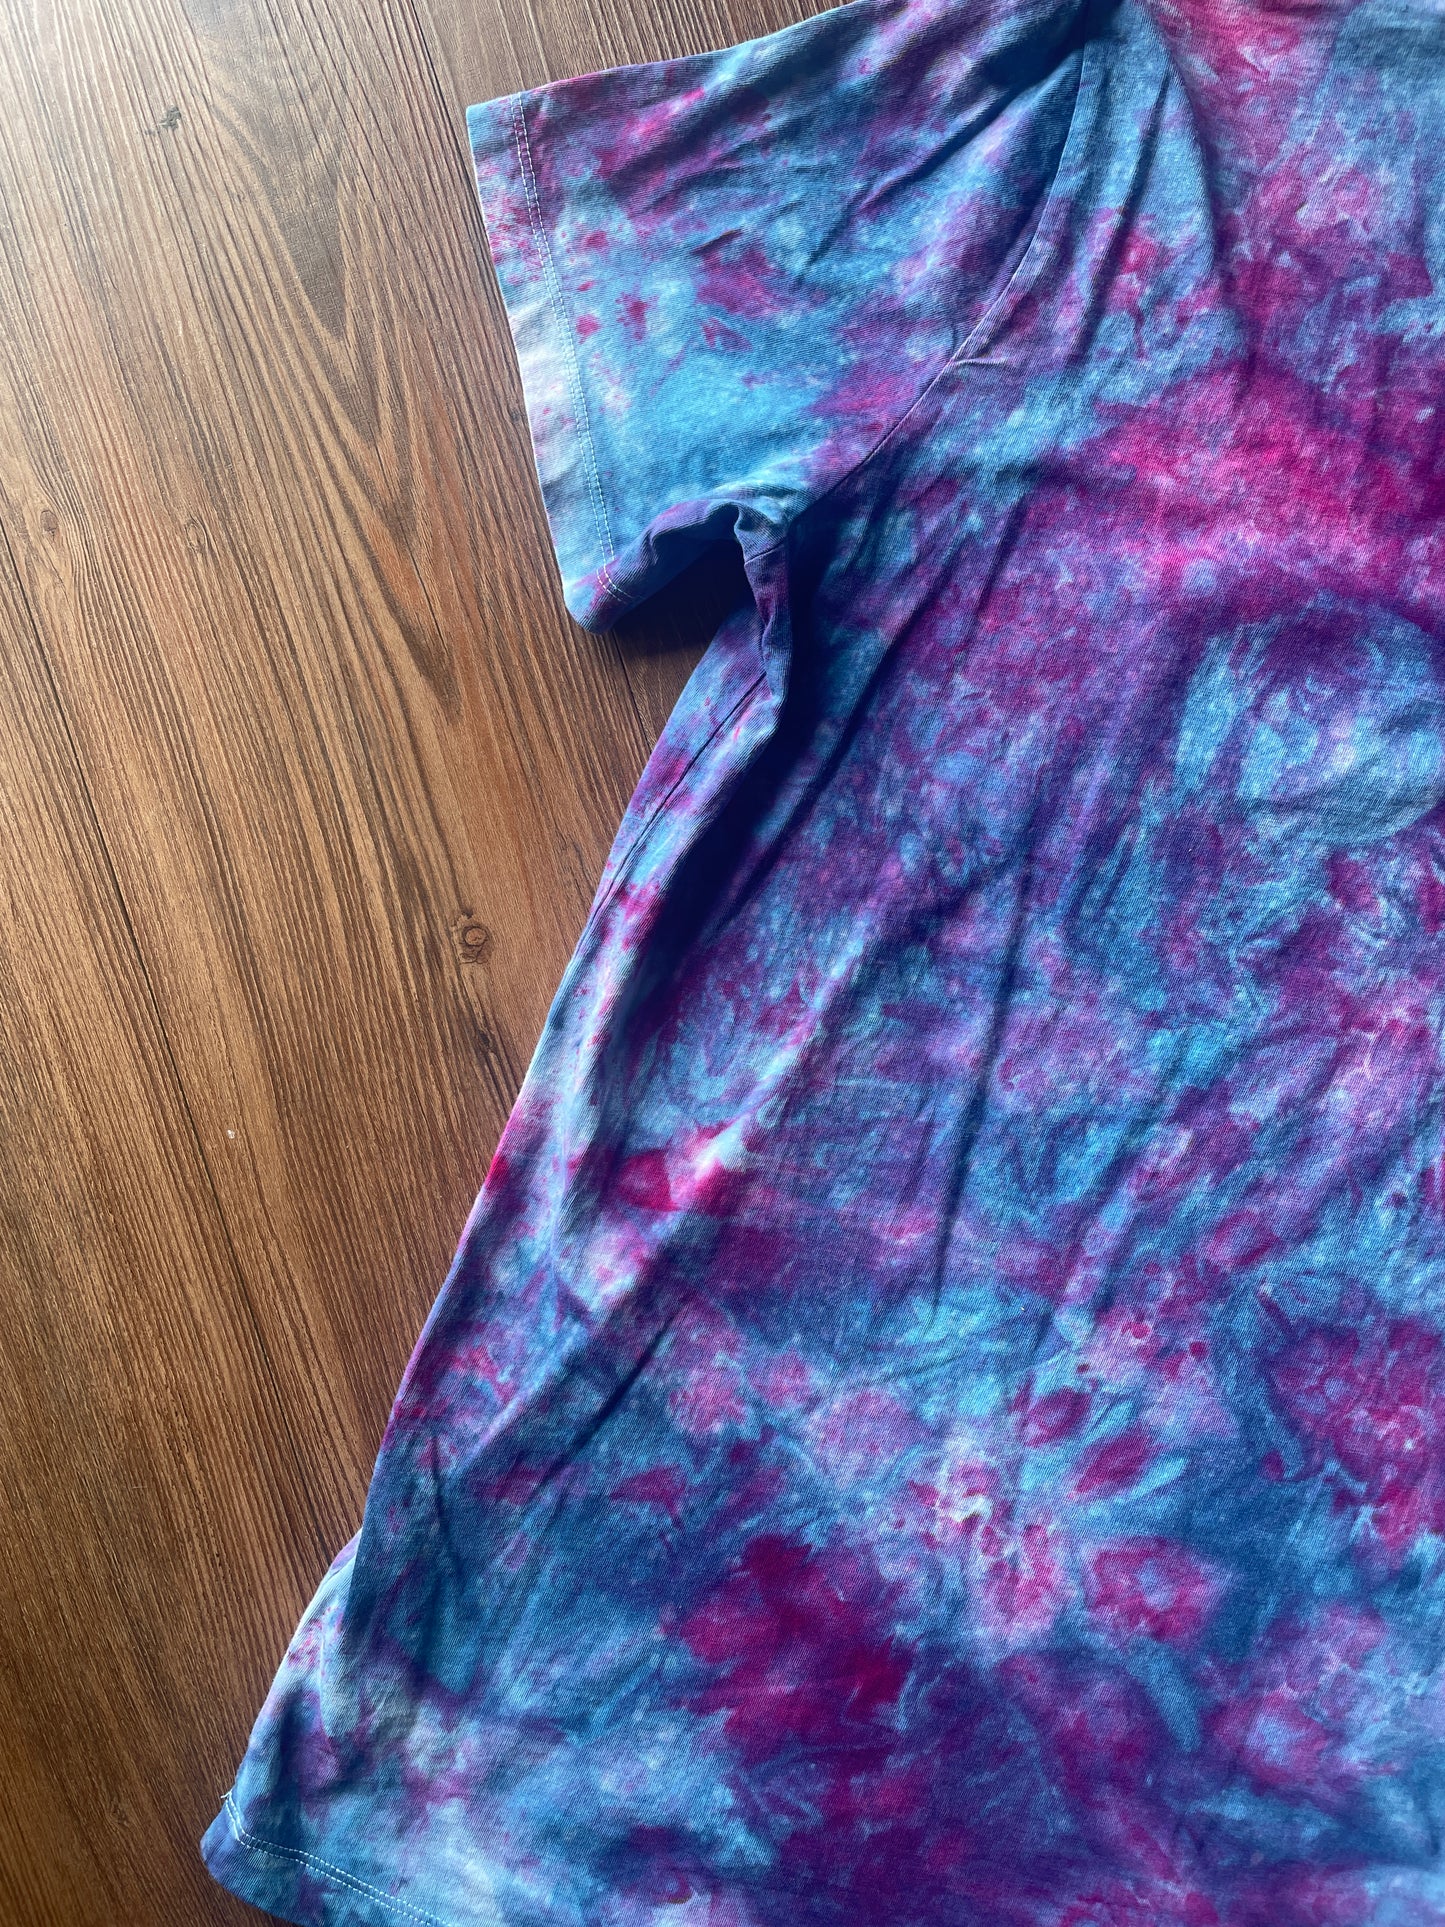 Large Women’s Anti-Gun Violence Handmade Galaxy Tie Dye T-Shirt | H&M Non-Violence Tie Dye Short Sleeve